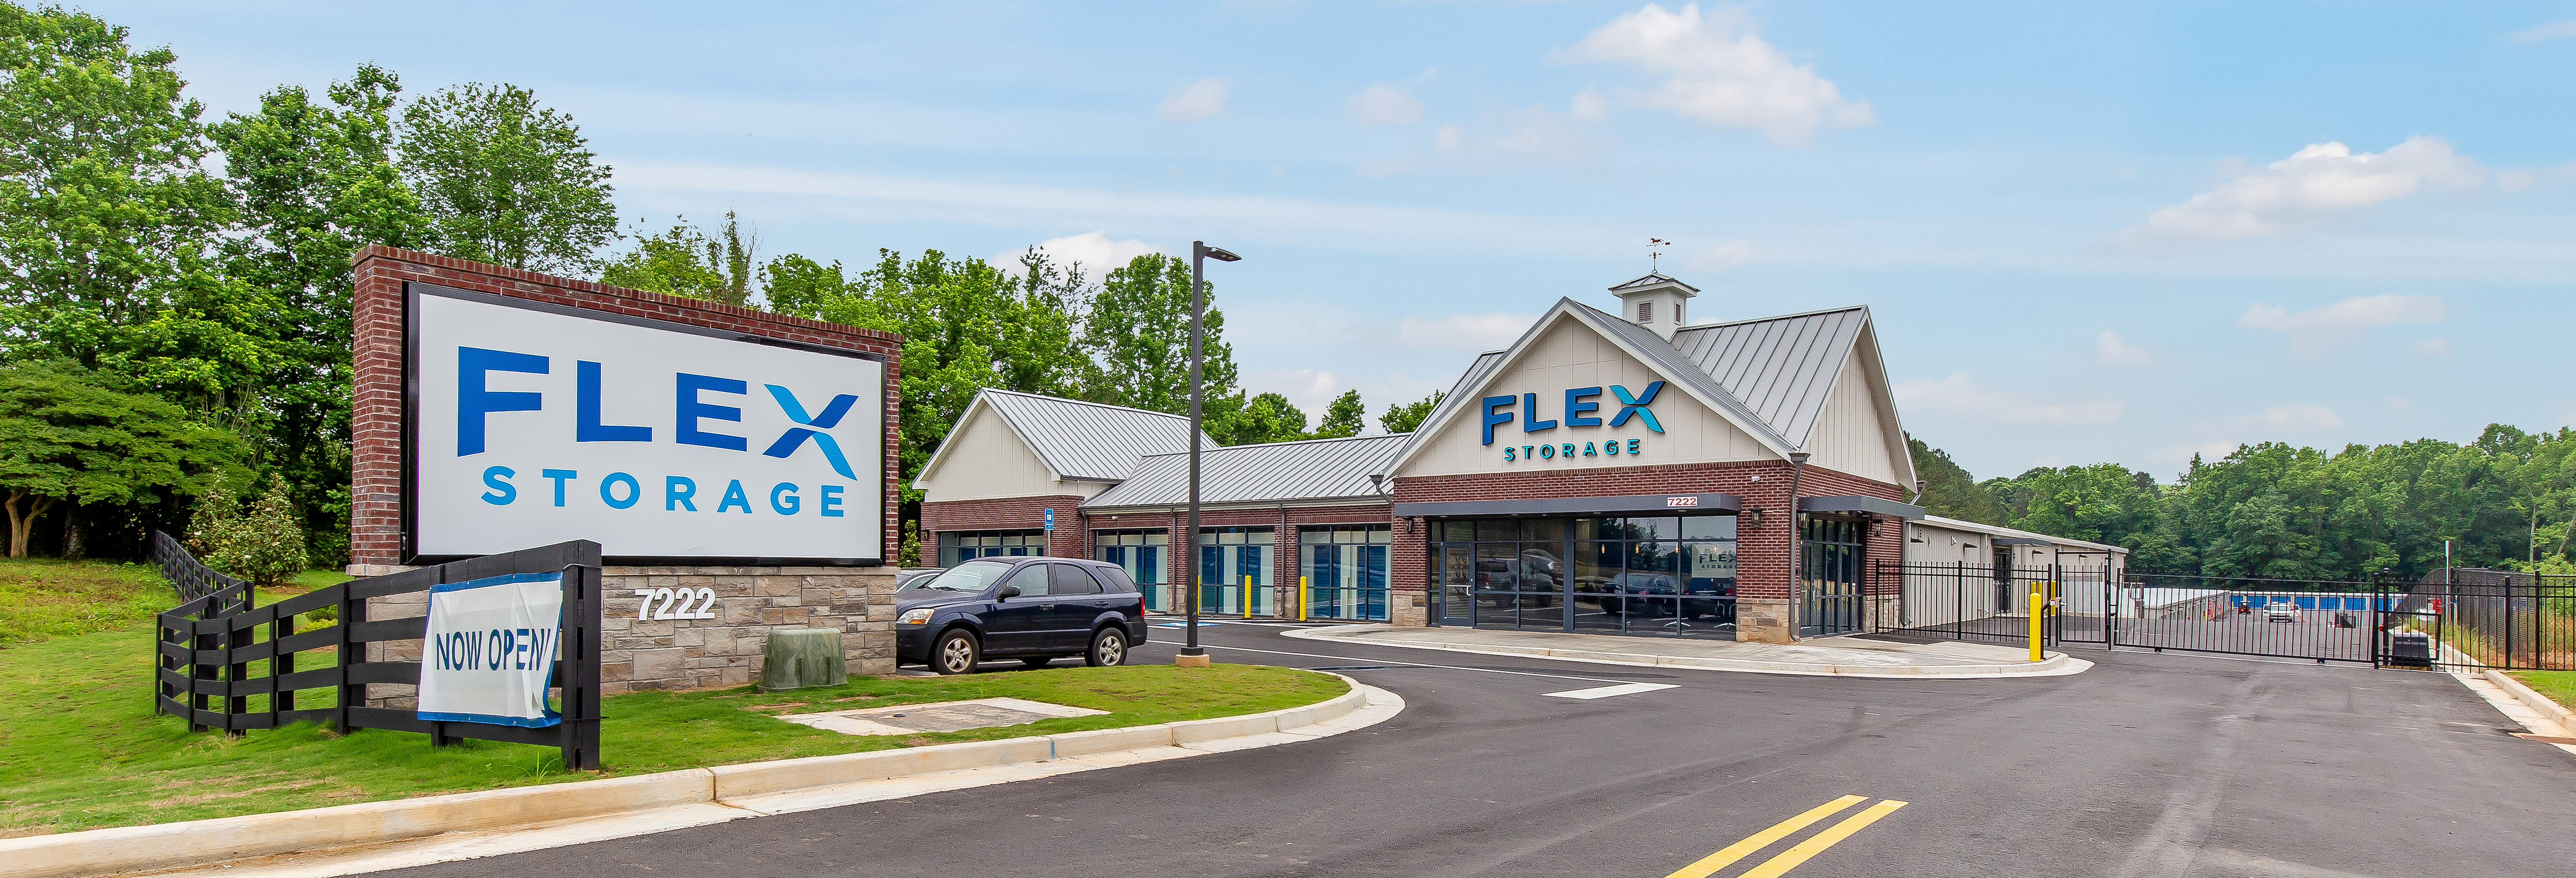 Flex Storage Canton, Cherokee, Georgia, Close to me